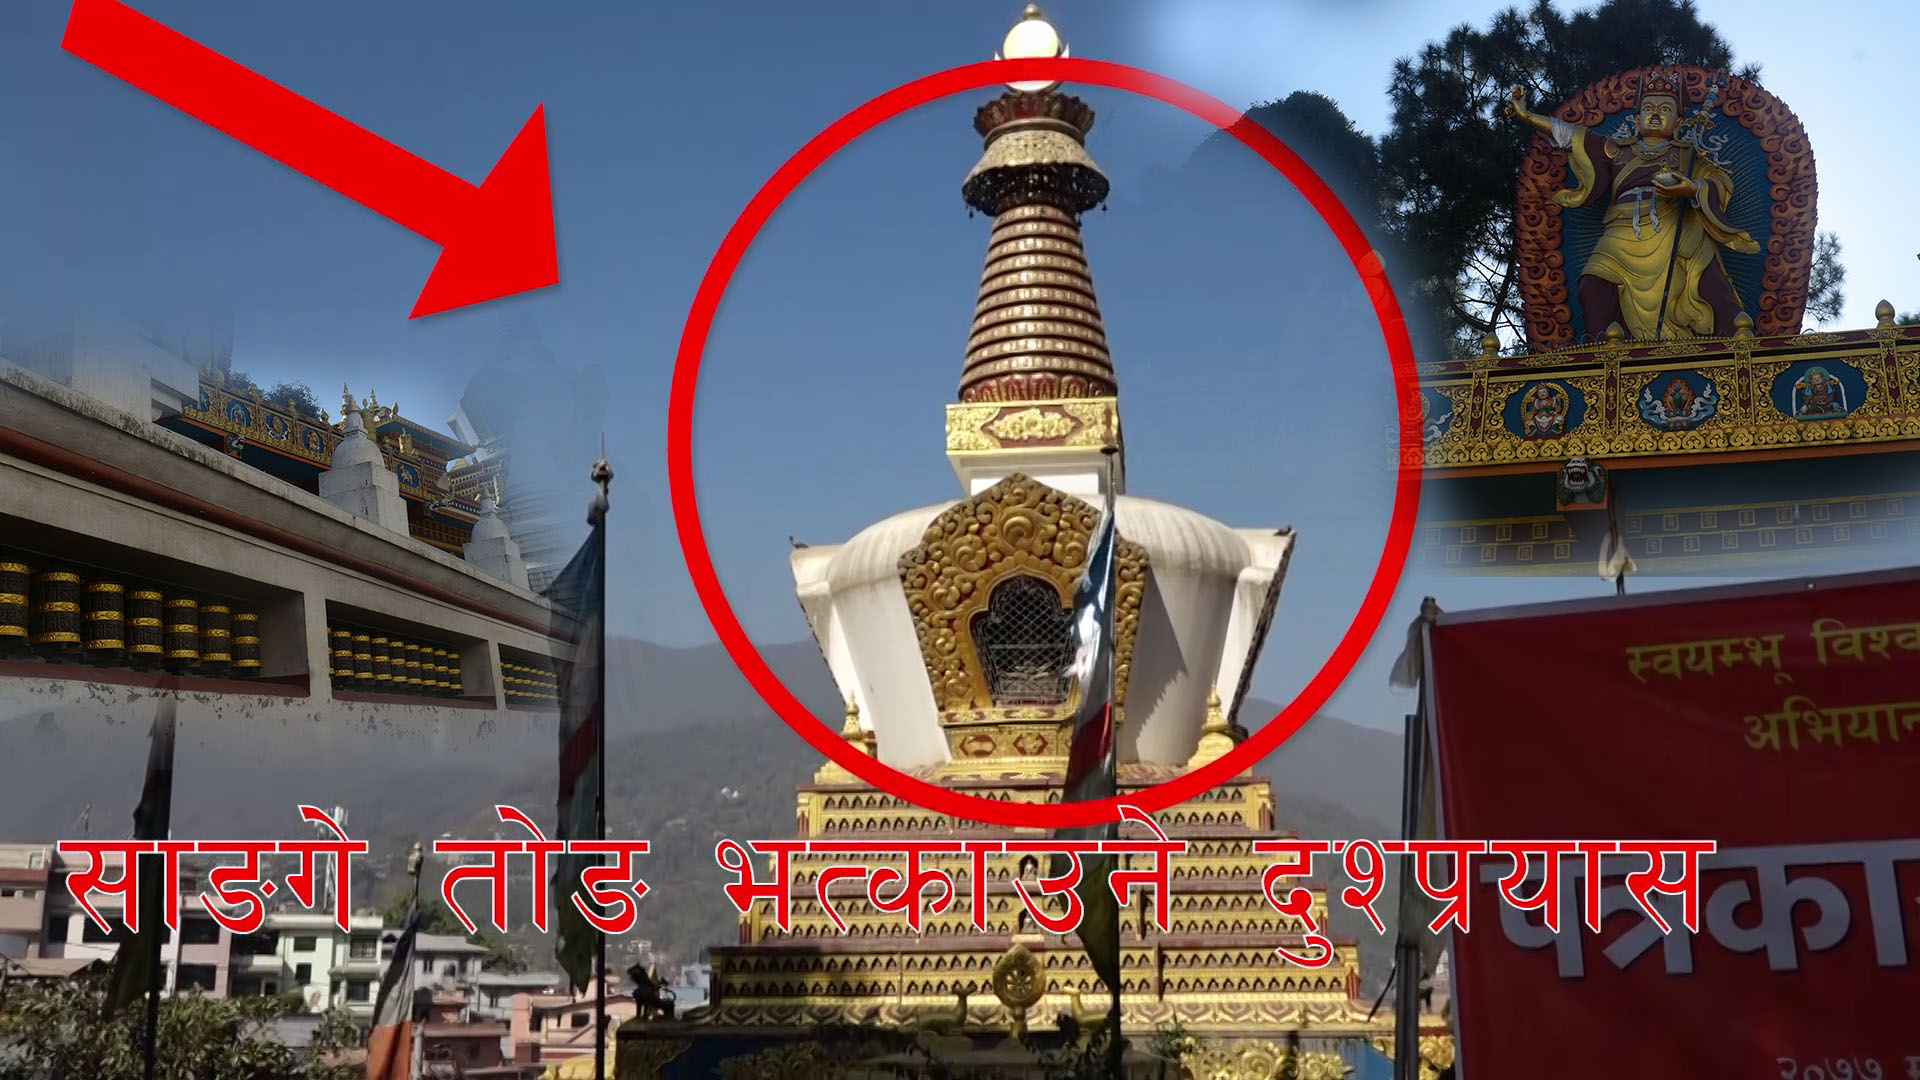 Swayambhu Buddhapark Statues to be demolished for road expansion